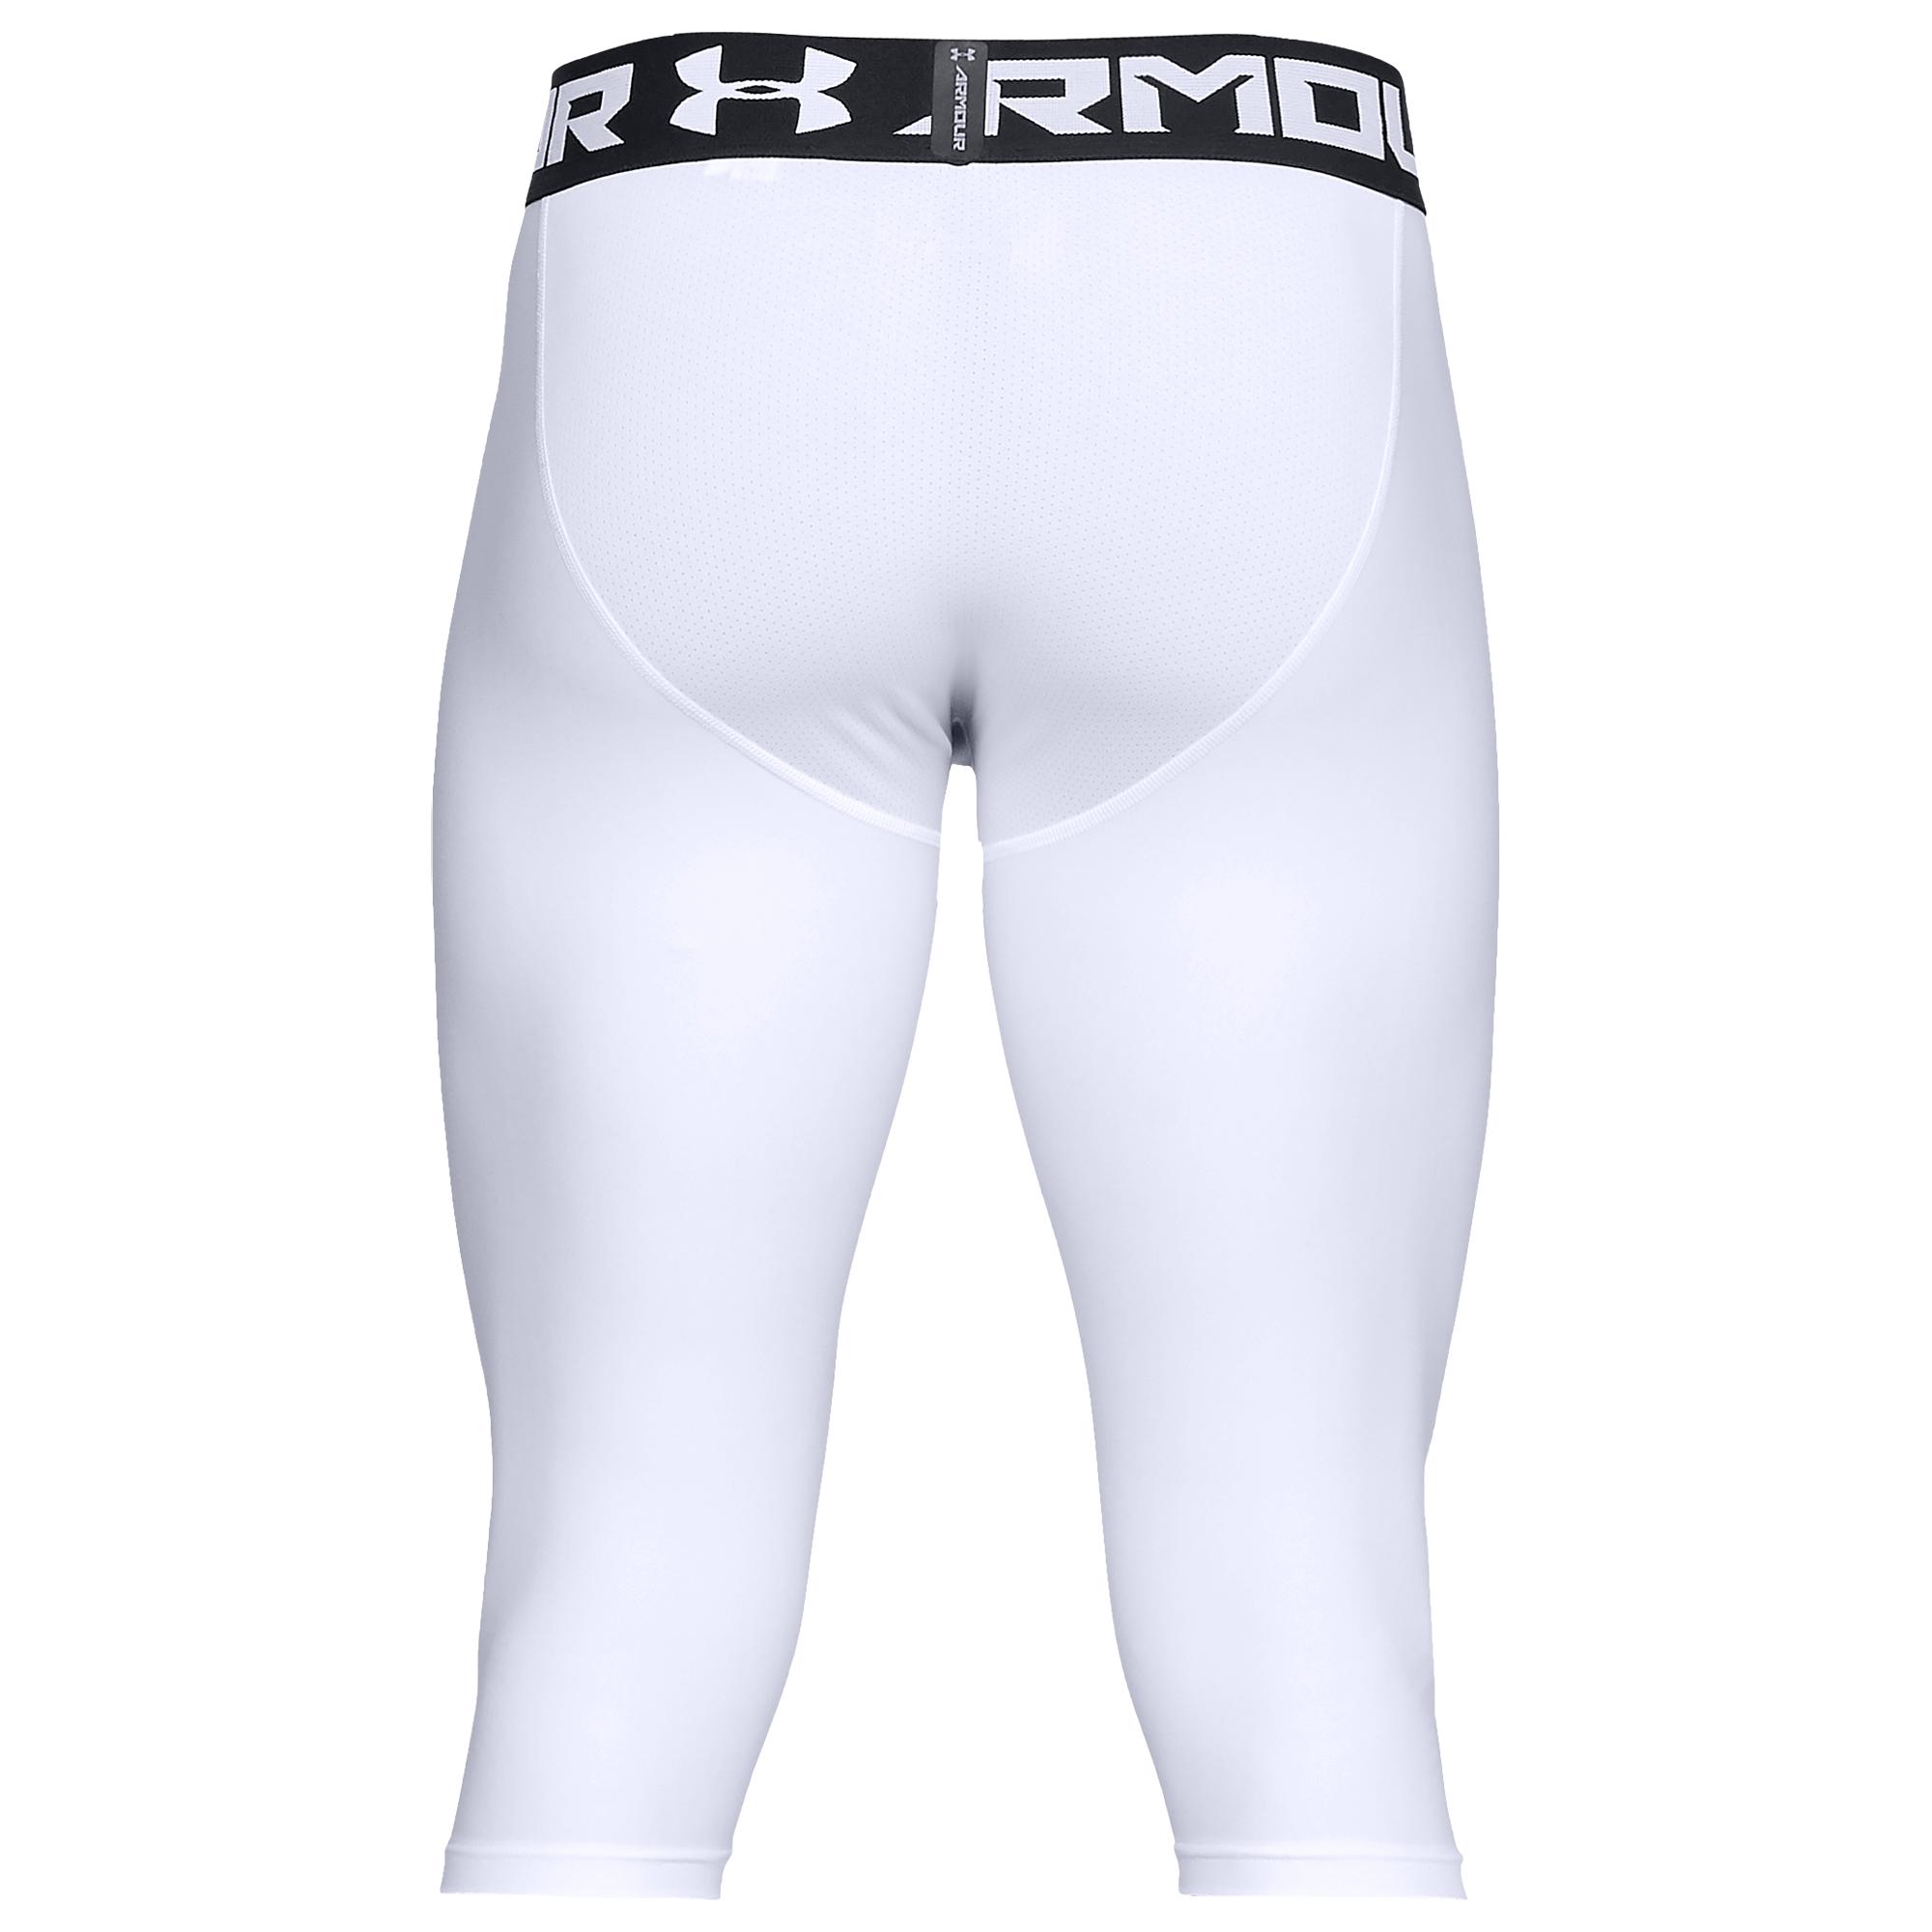 Under Armour Baseline Knee Tights in White/Black (White) for Men - Lyst